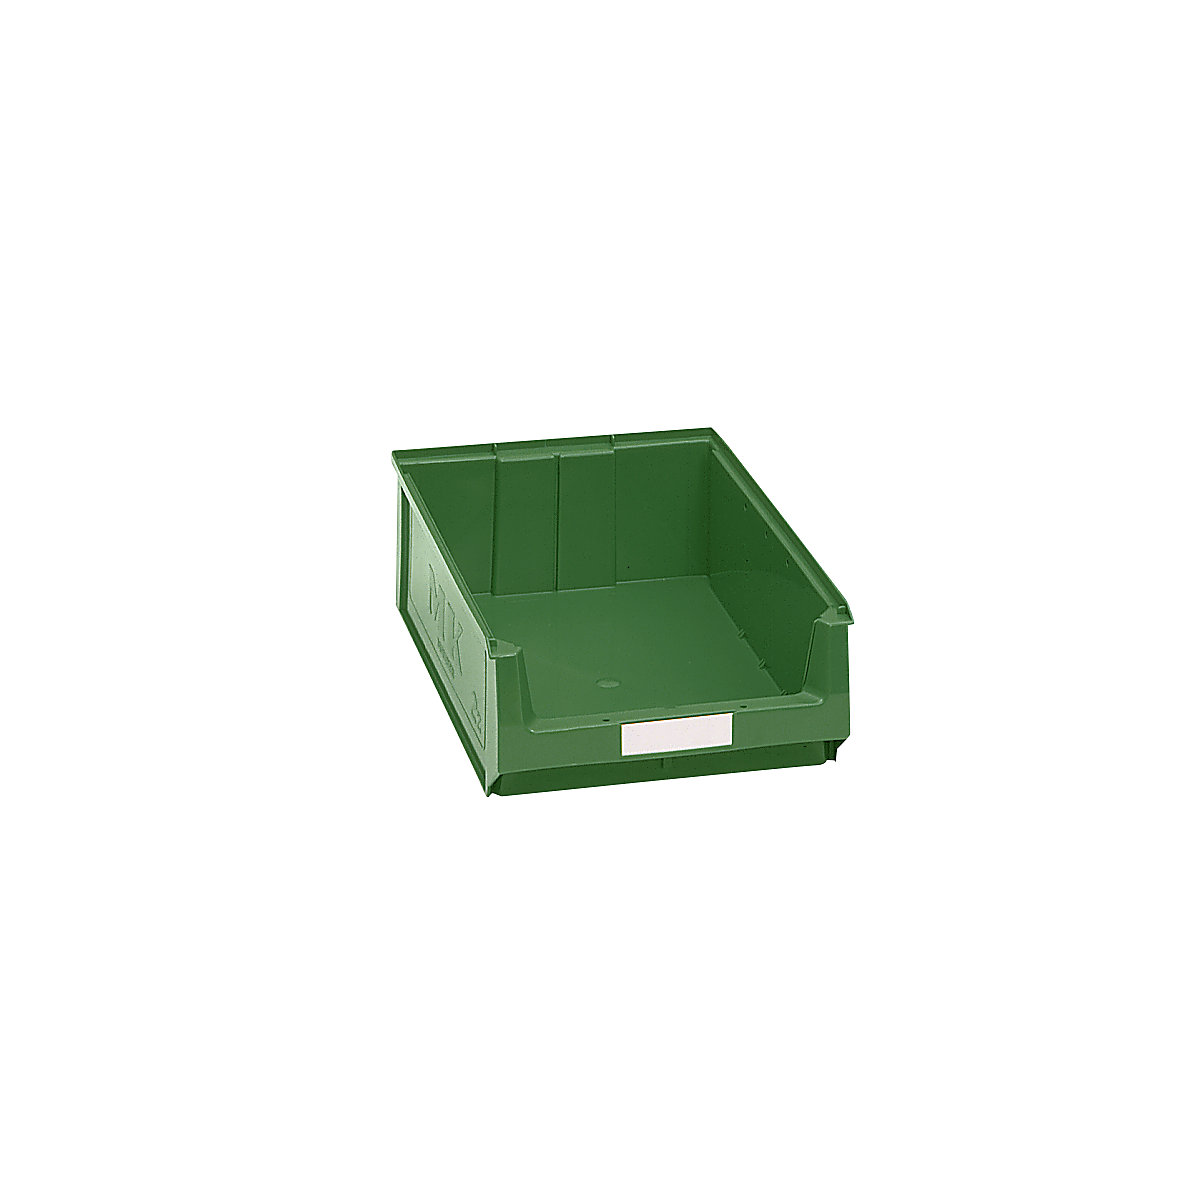 Magazijnbak van polyethyleen – mauser, l x b x h = 500 x 310 x 140 mm, groen, VE à 14 st.